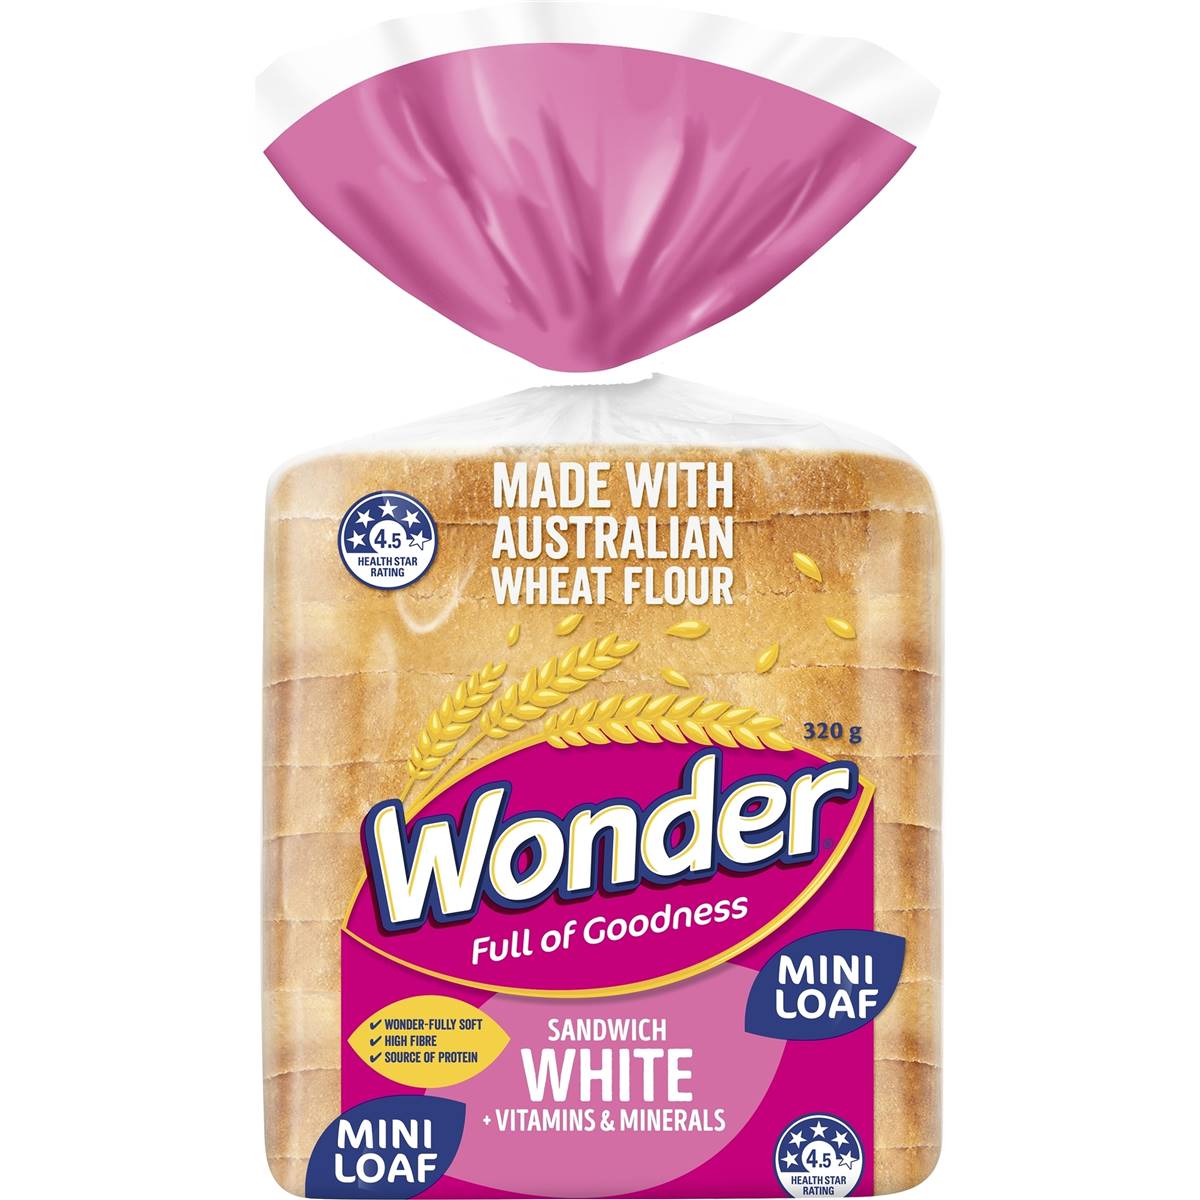 Calories in Wonder Sandwich White Mini Loaf